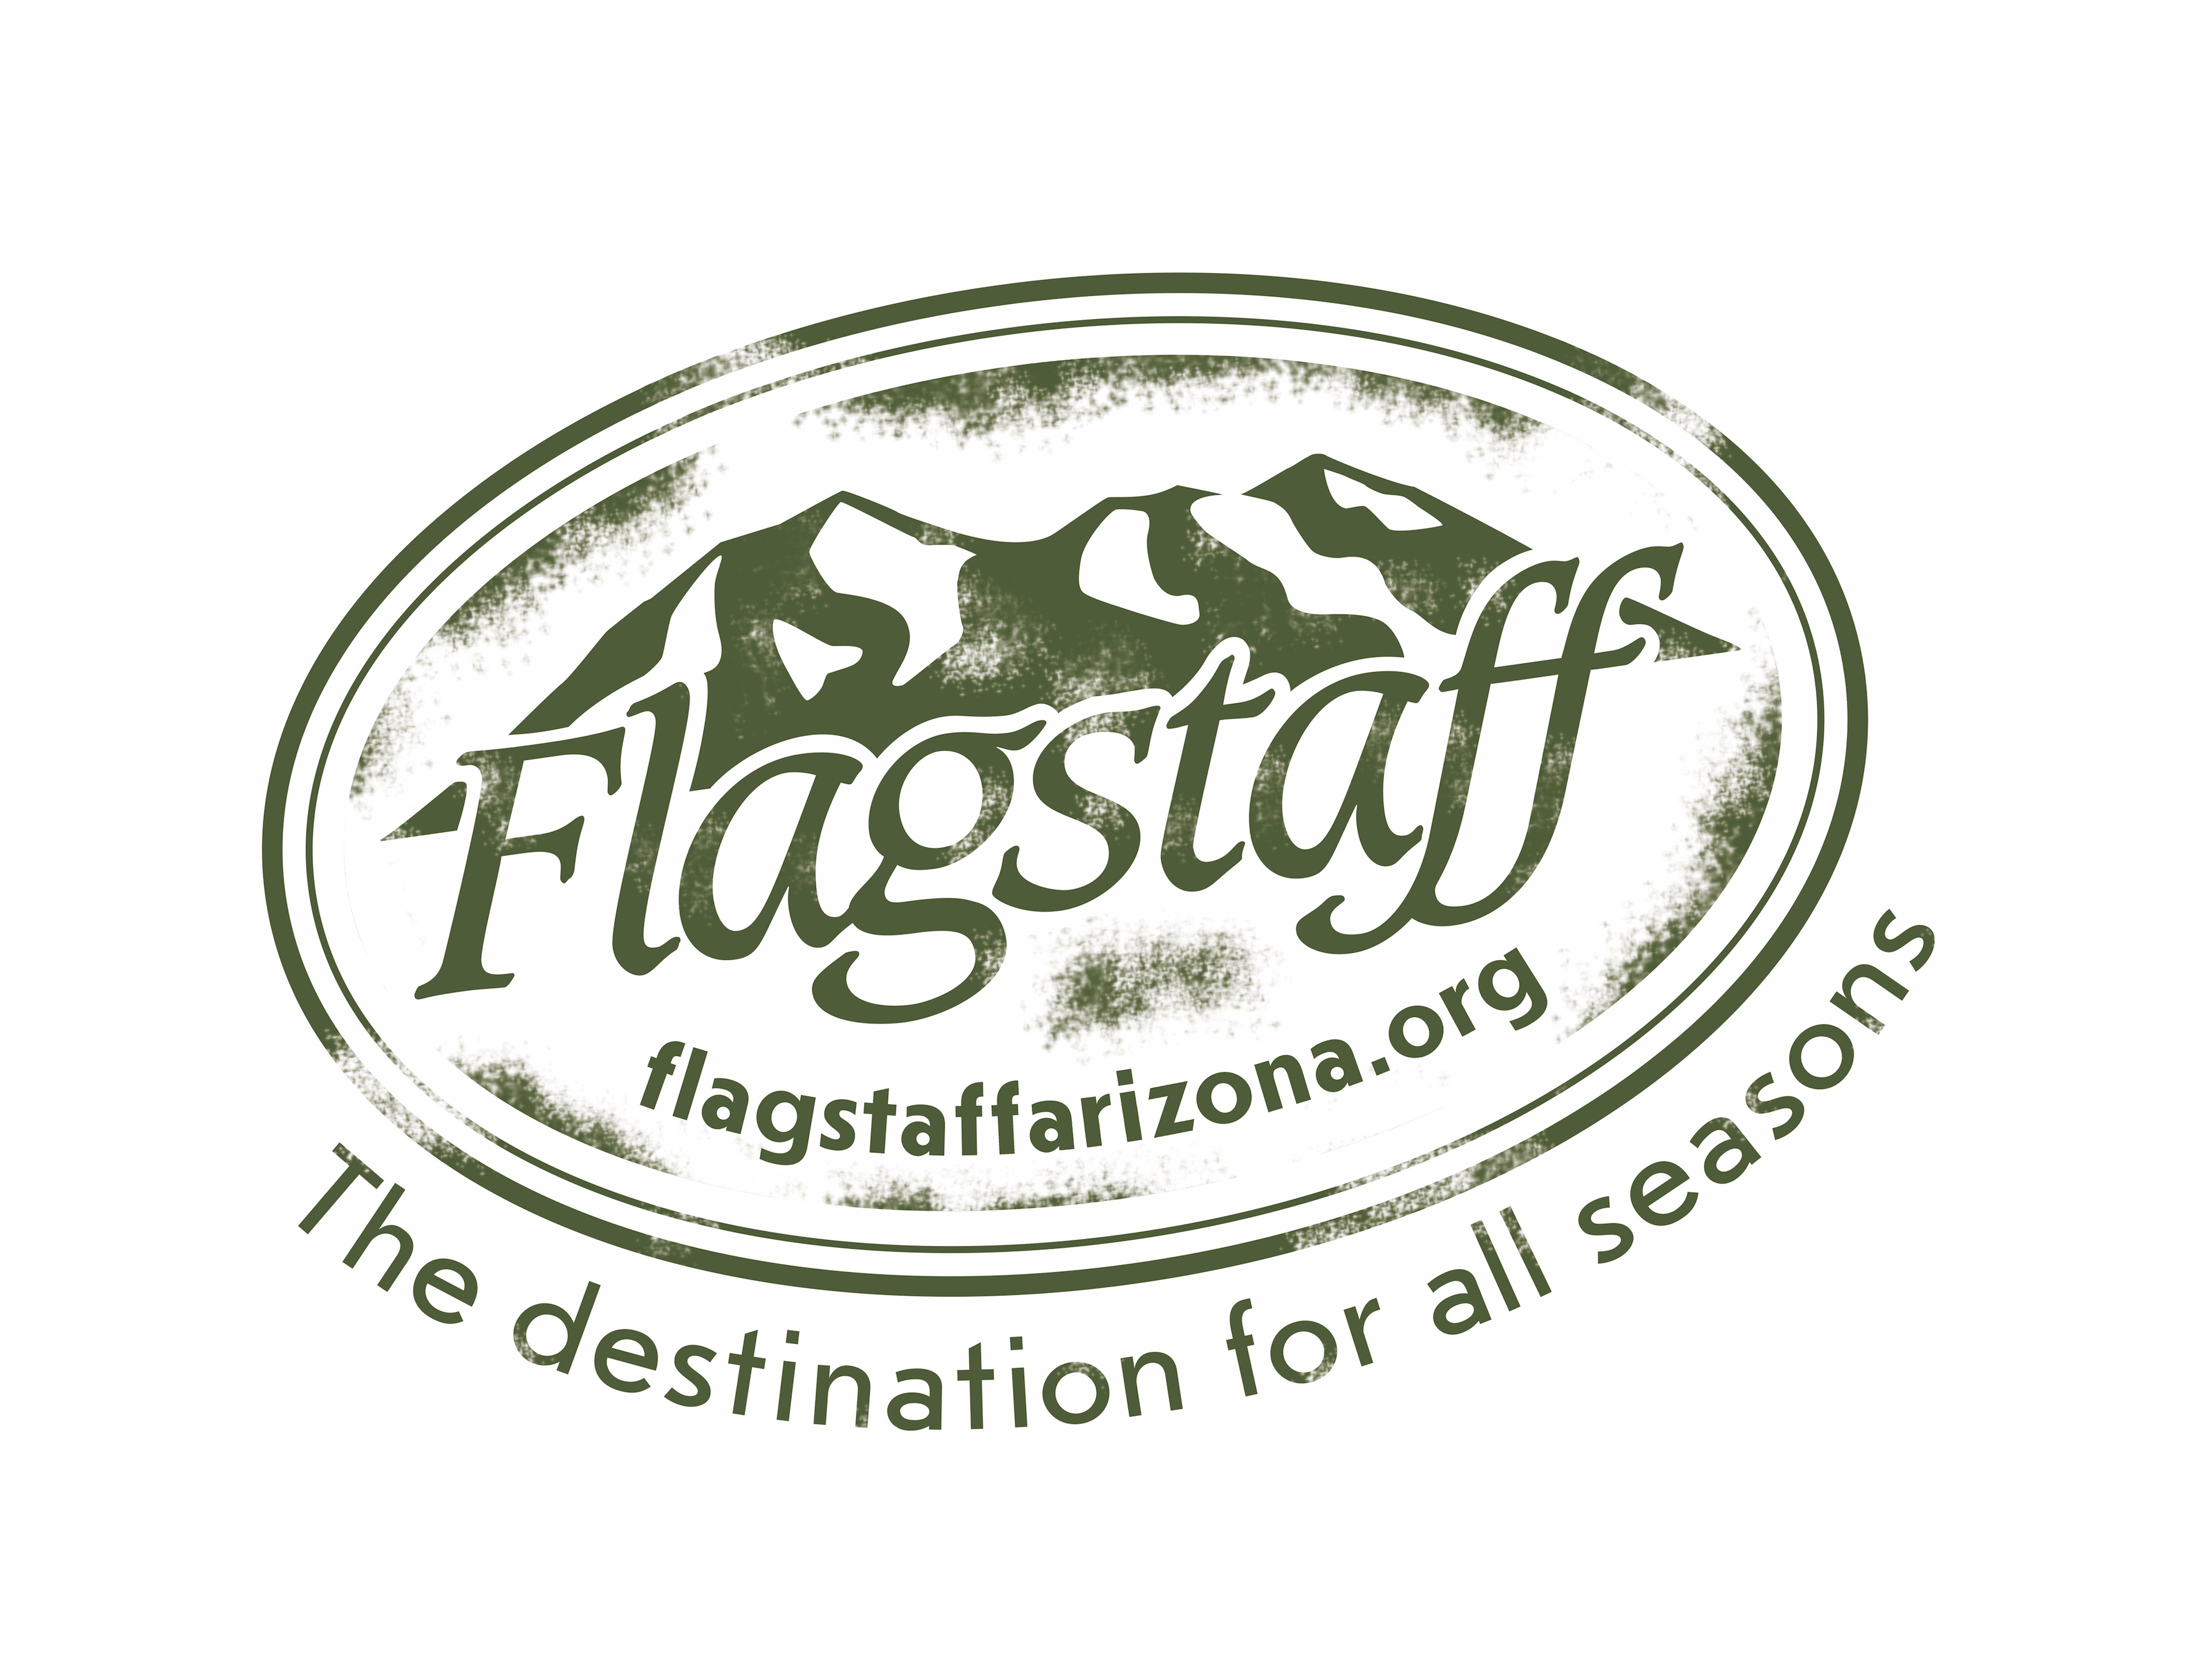 New Nonstop Service to Flagstaff/Grand Canyon, Arizona (FLG), Announced